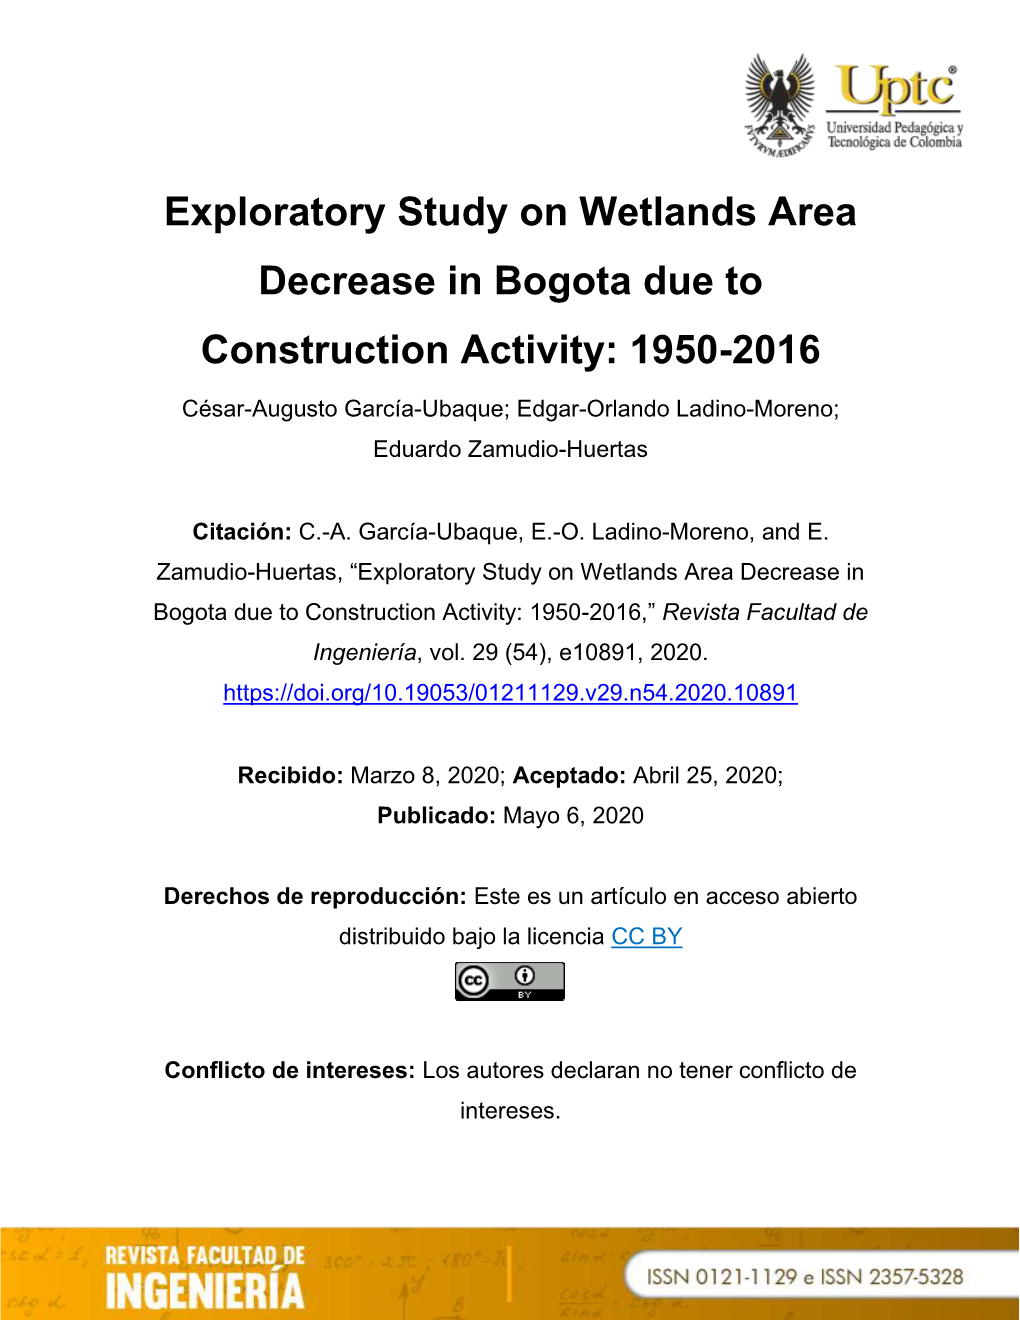 Exploratory Study on Wetlands Area Decrease in Bogota Due To